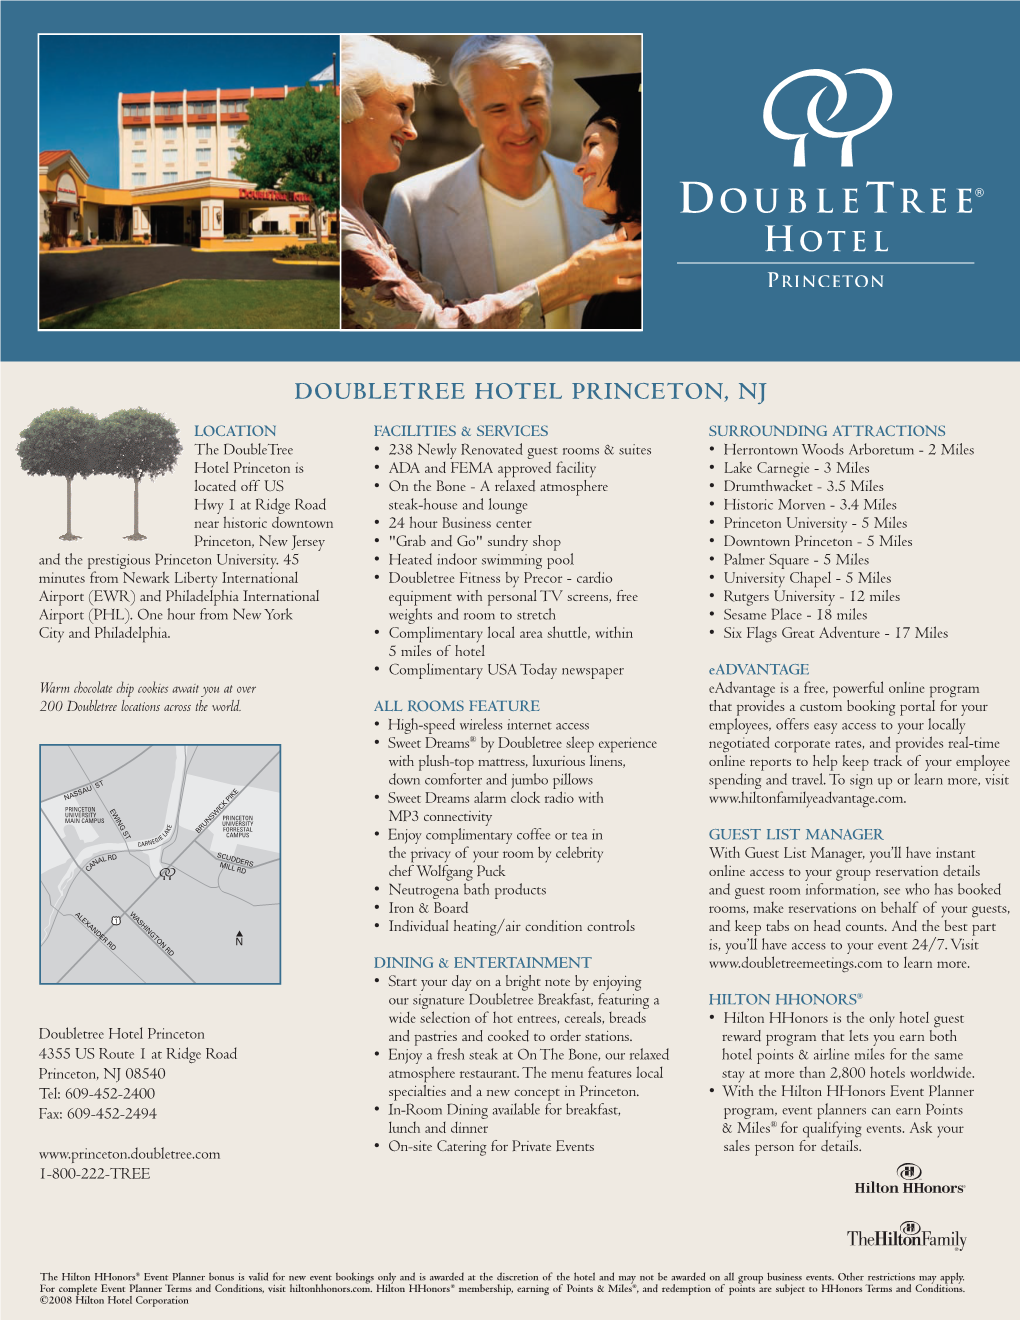 Doubletree Hotel Princeton, Nj